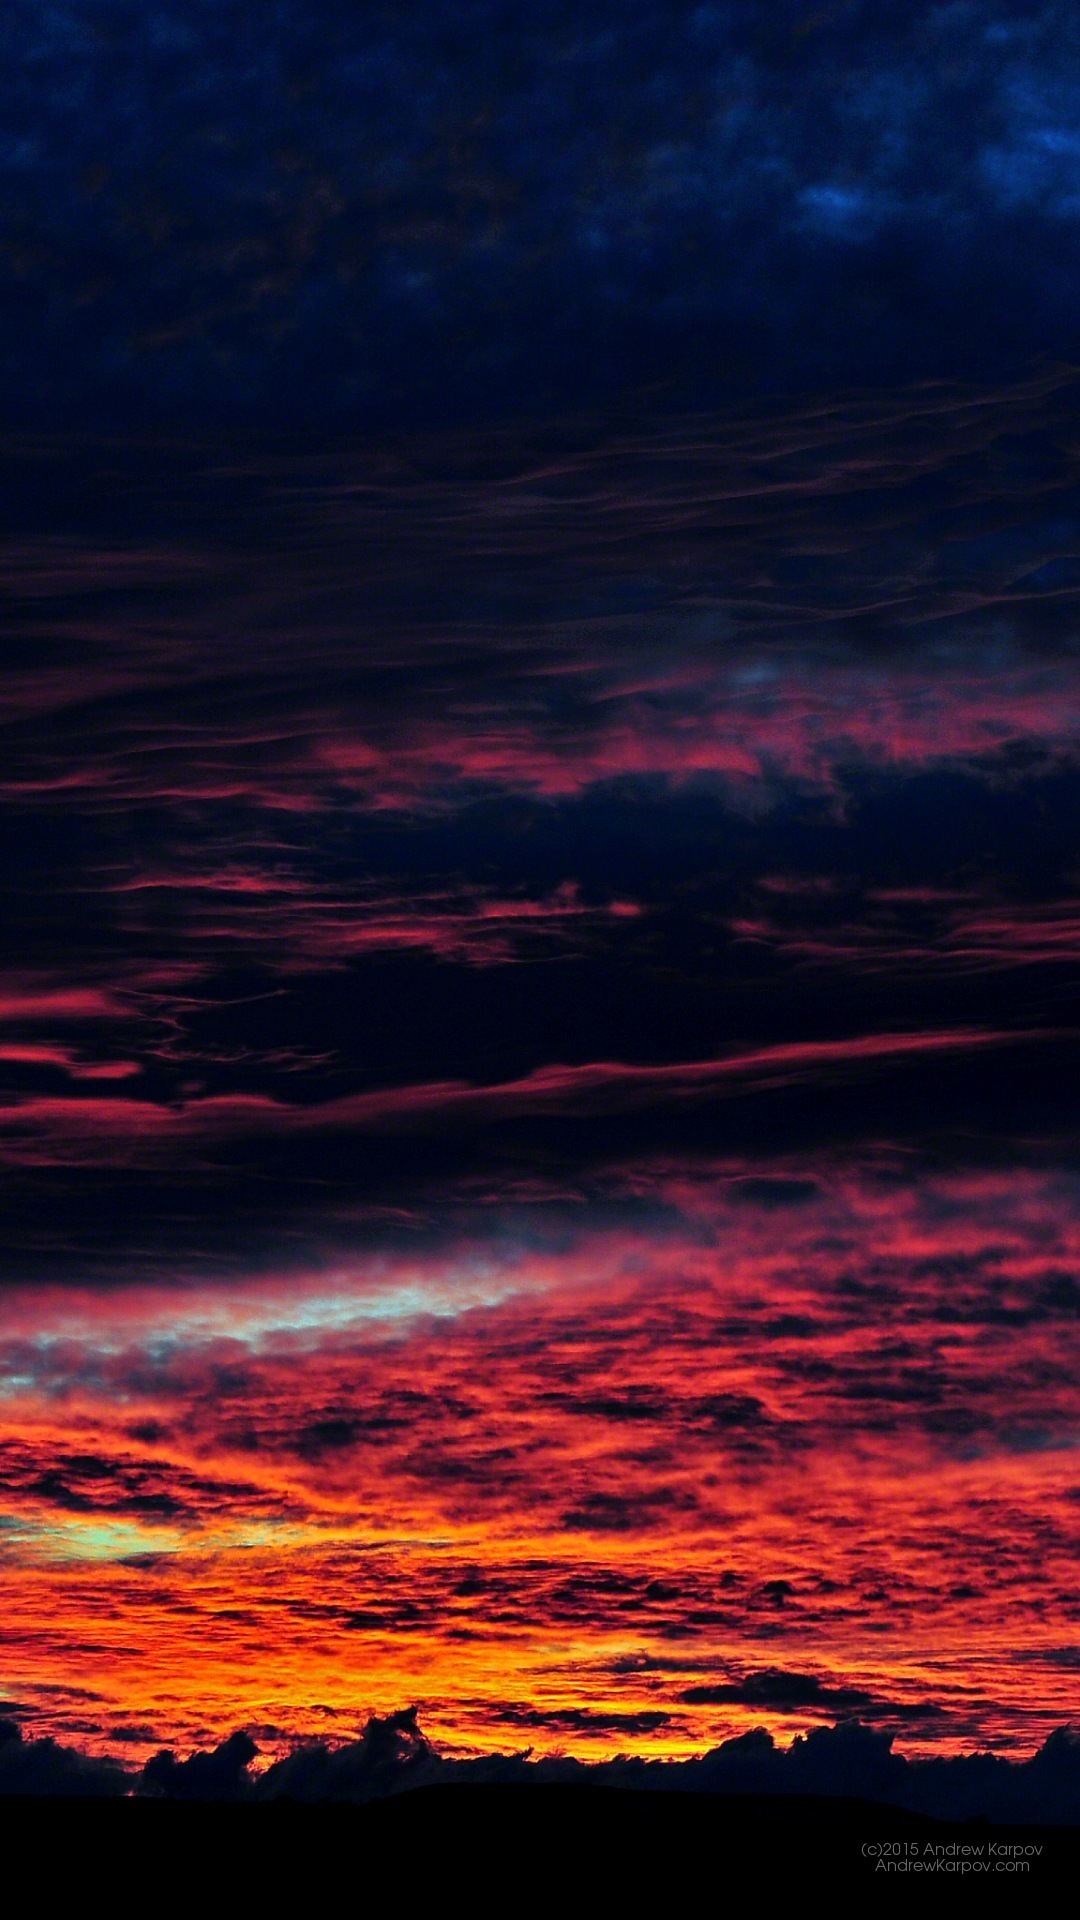 foto untuk wallpaper,sky,afterglow,red sky at morning,red,horizon